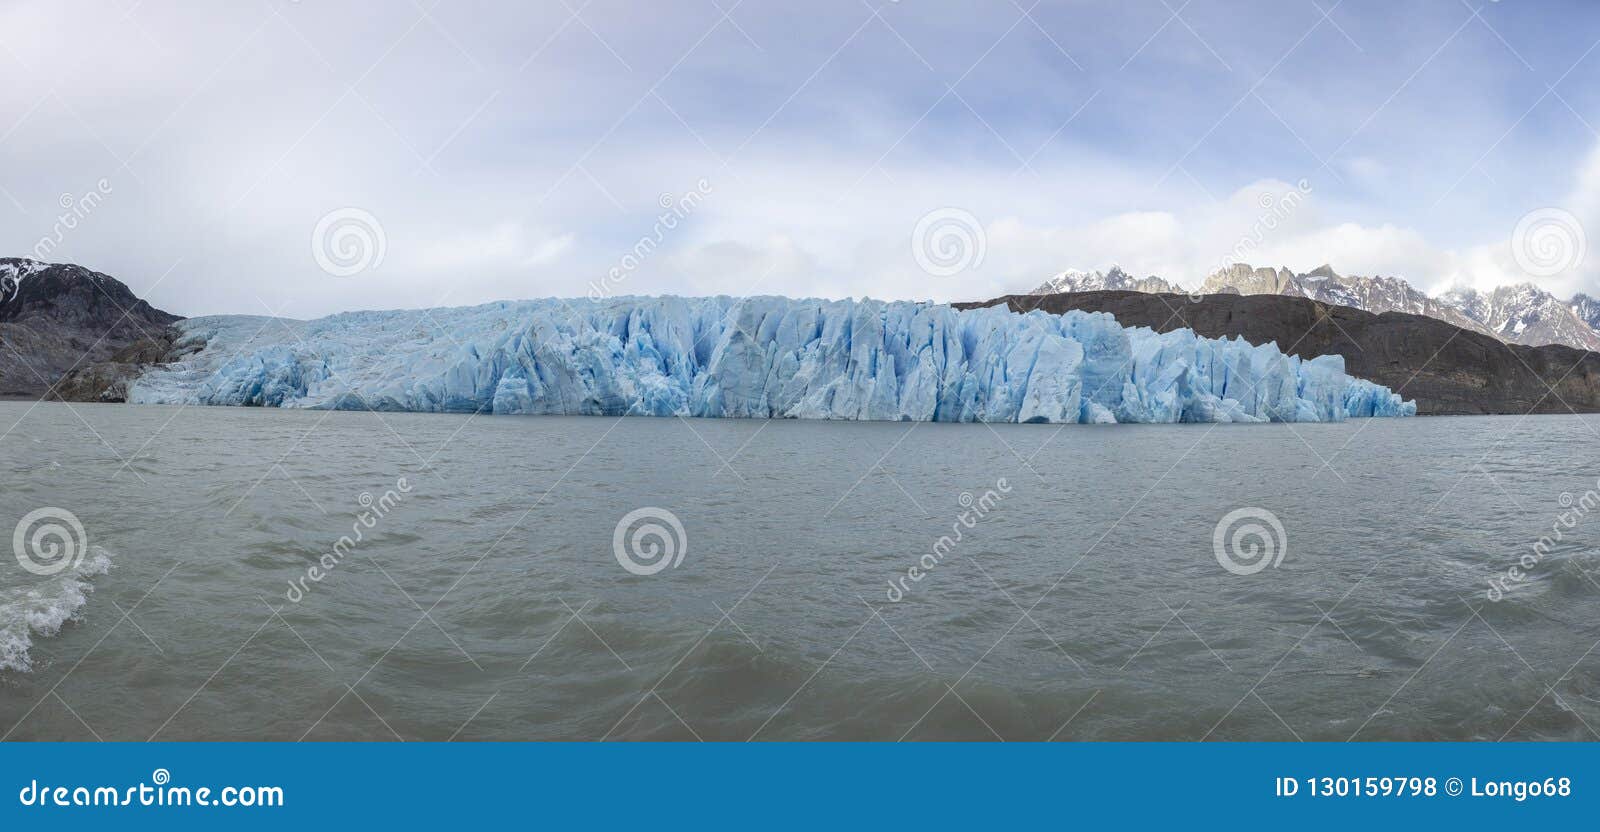 panoramic picture of glacier at lago grey